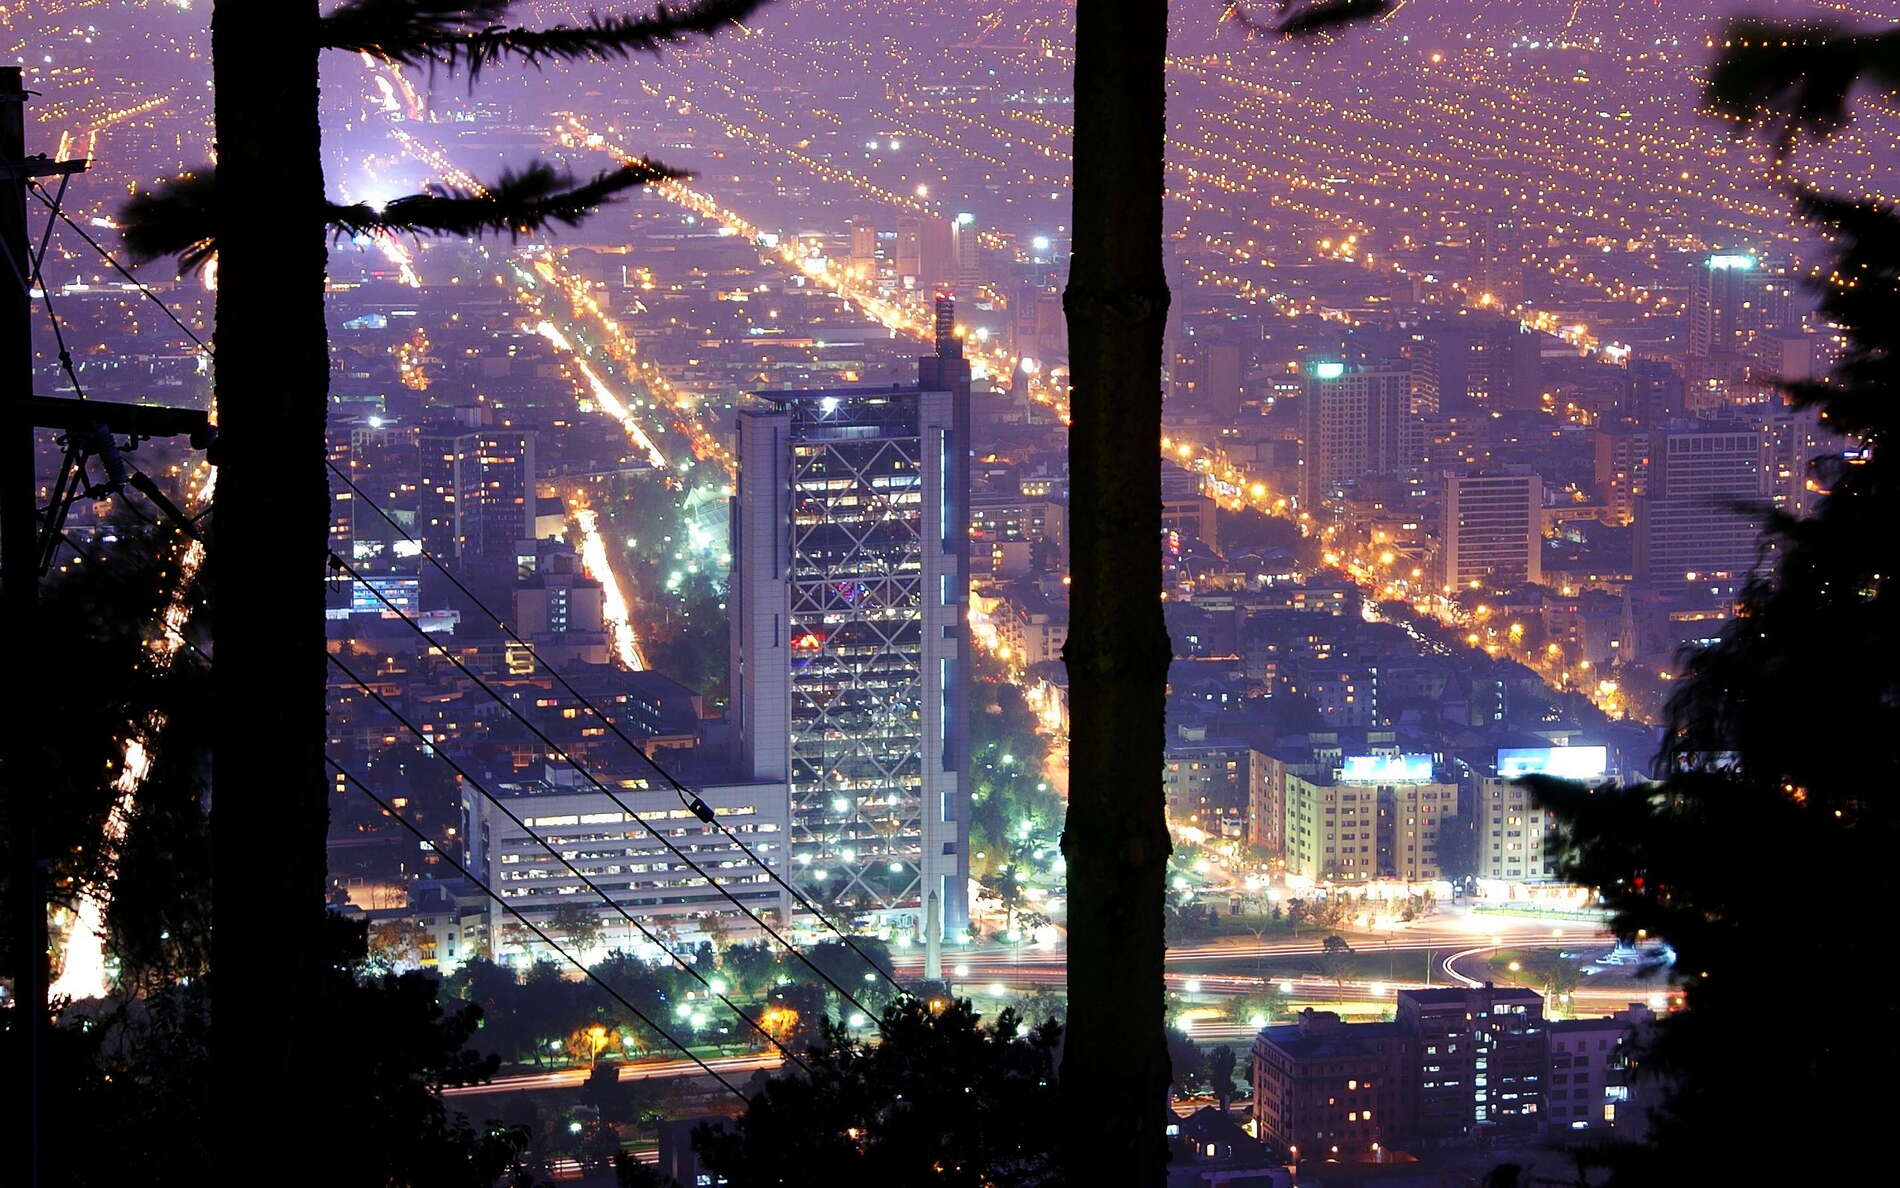 Santiago de Chile | CTC Tower at night